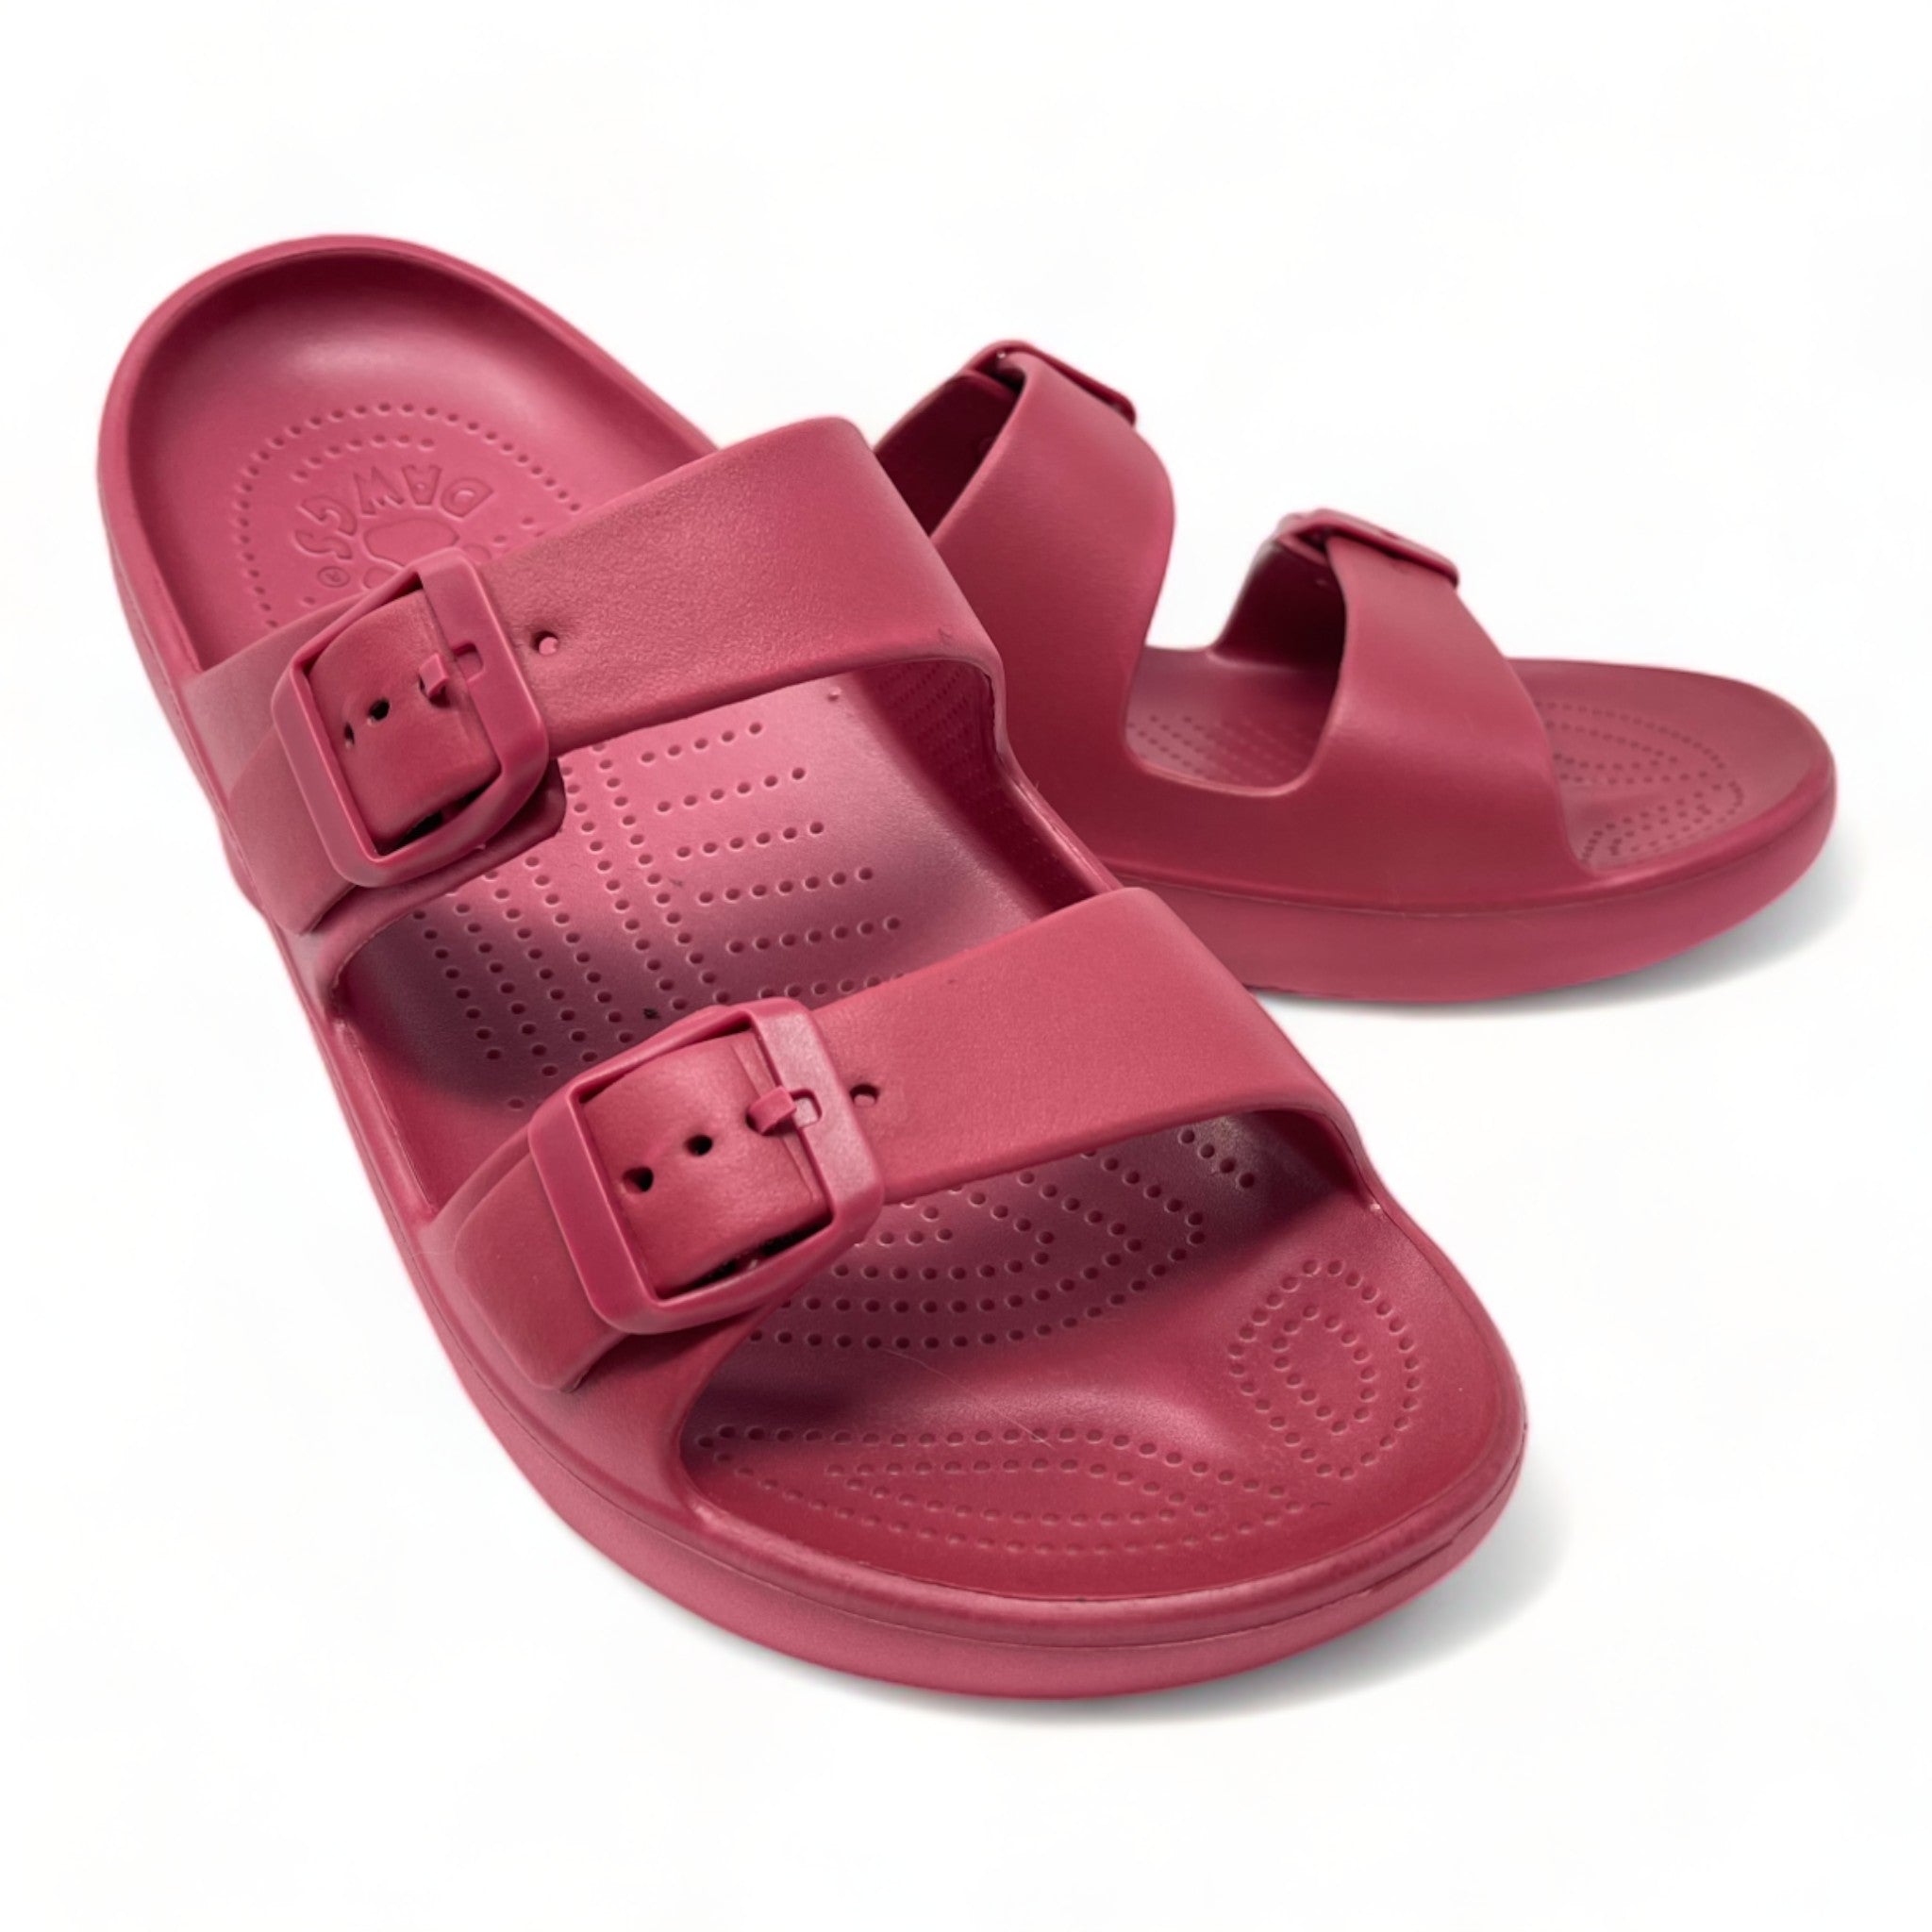 Women's Adjustable 2-Strap Sandals